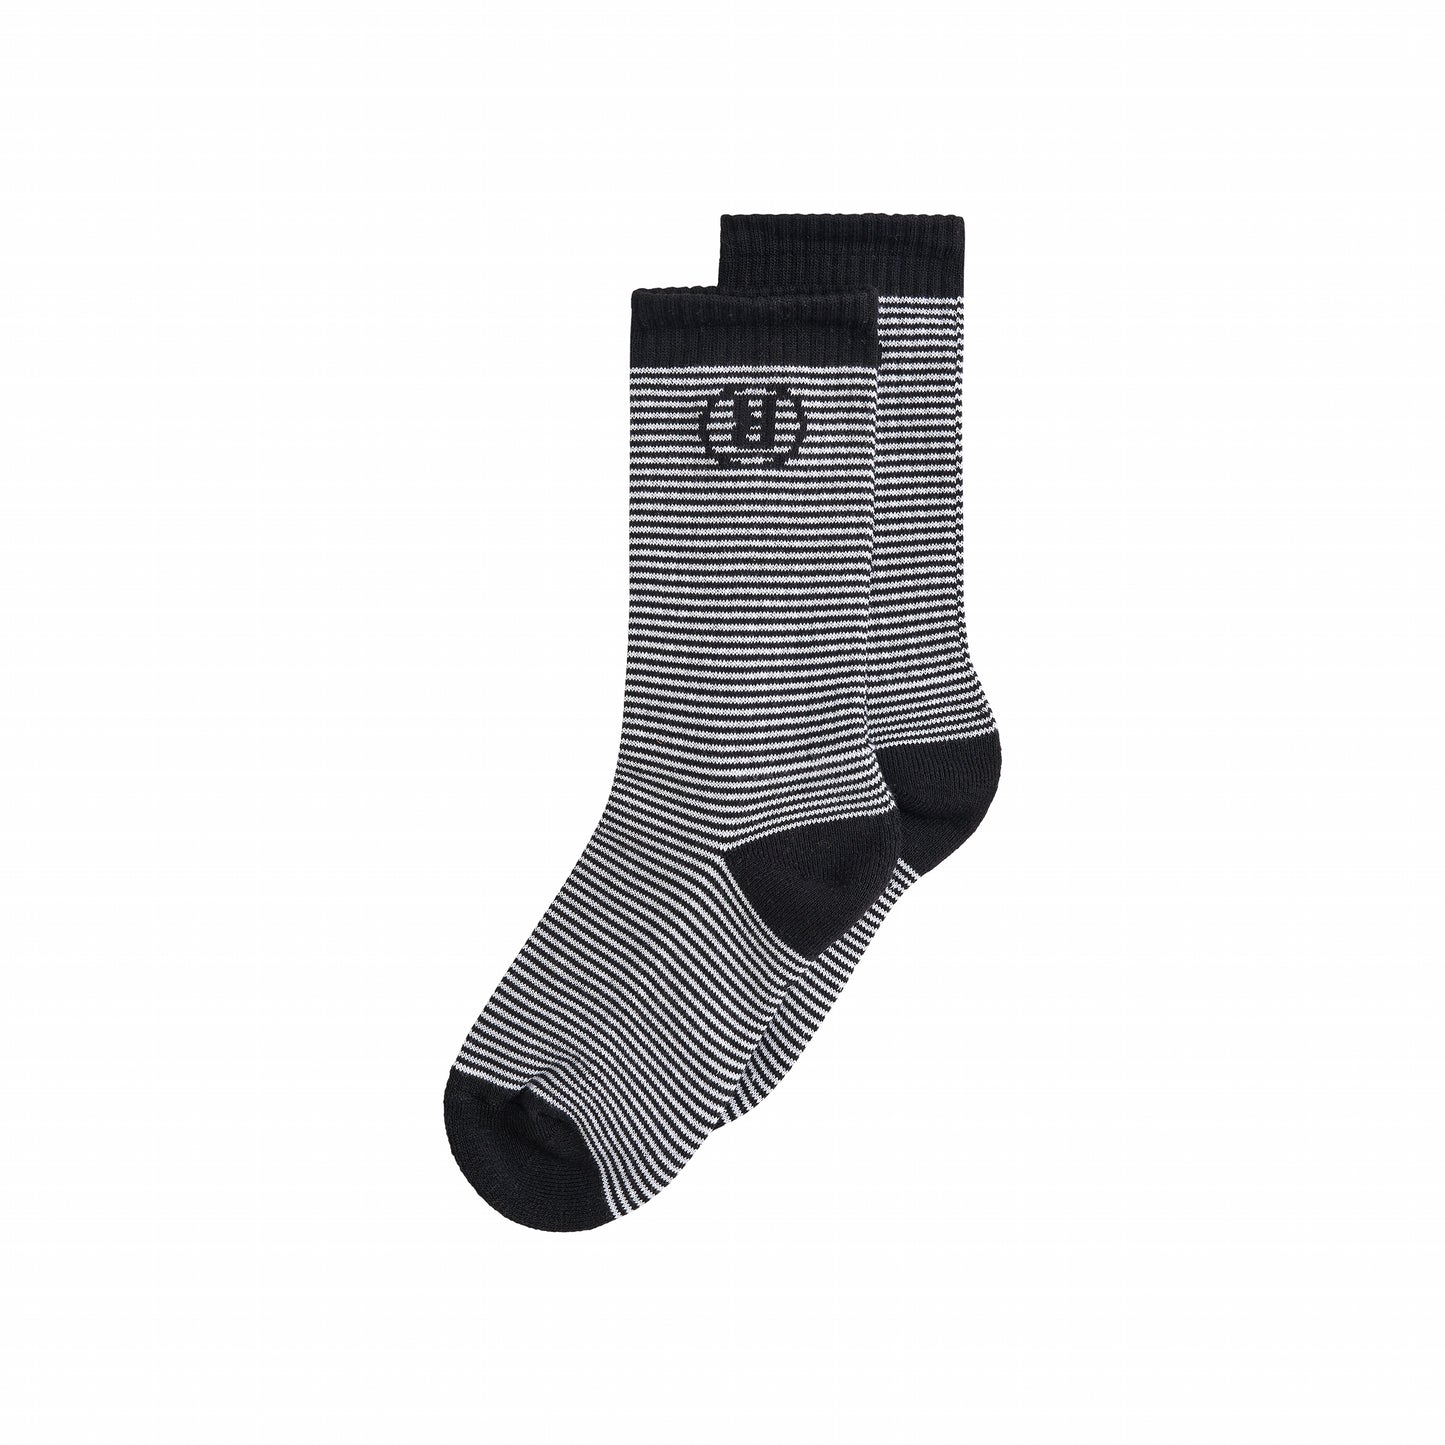 ® LOGO socks black & white striped